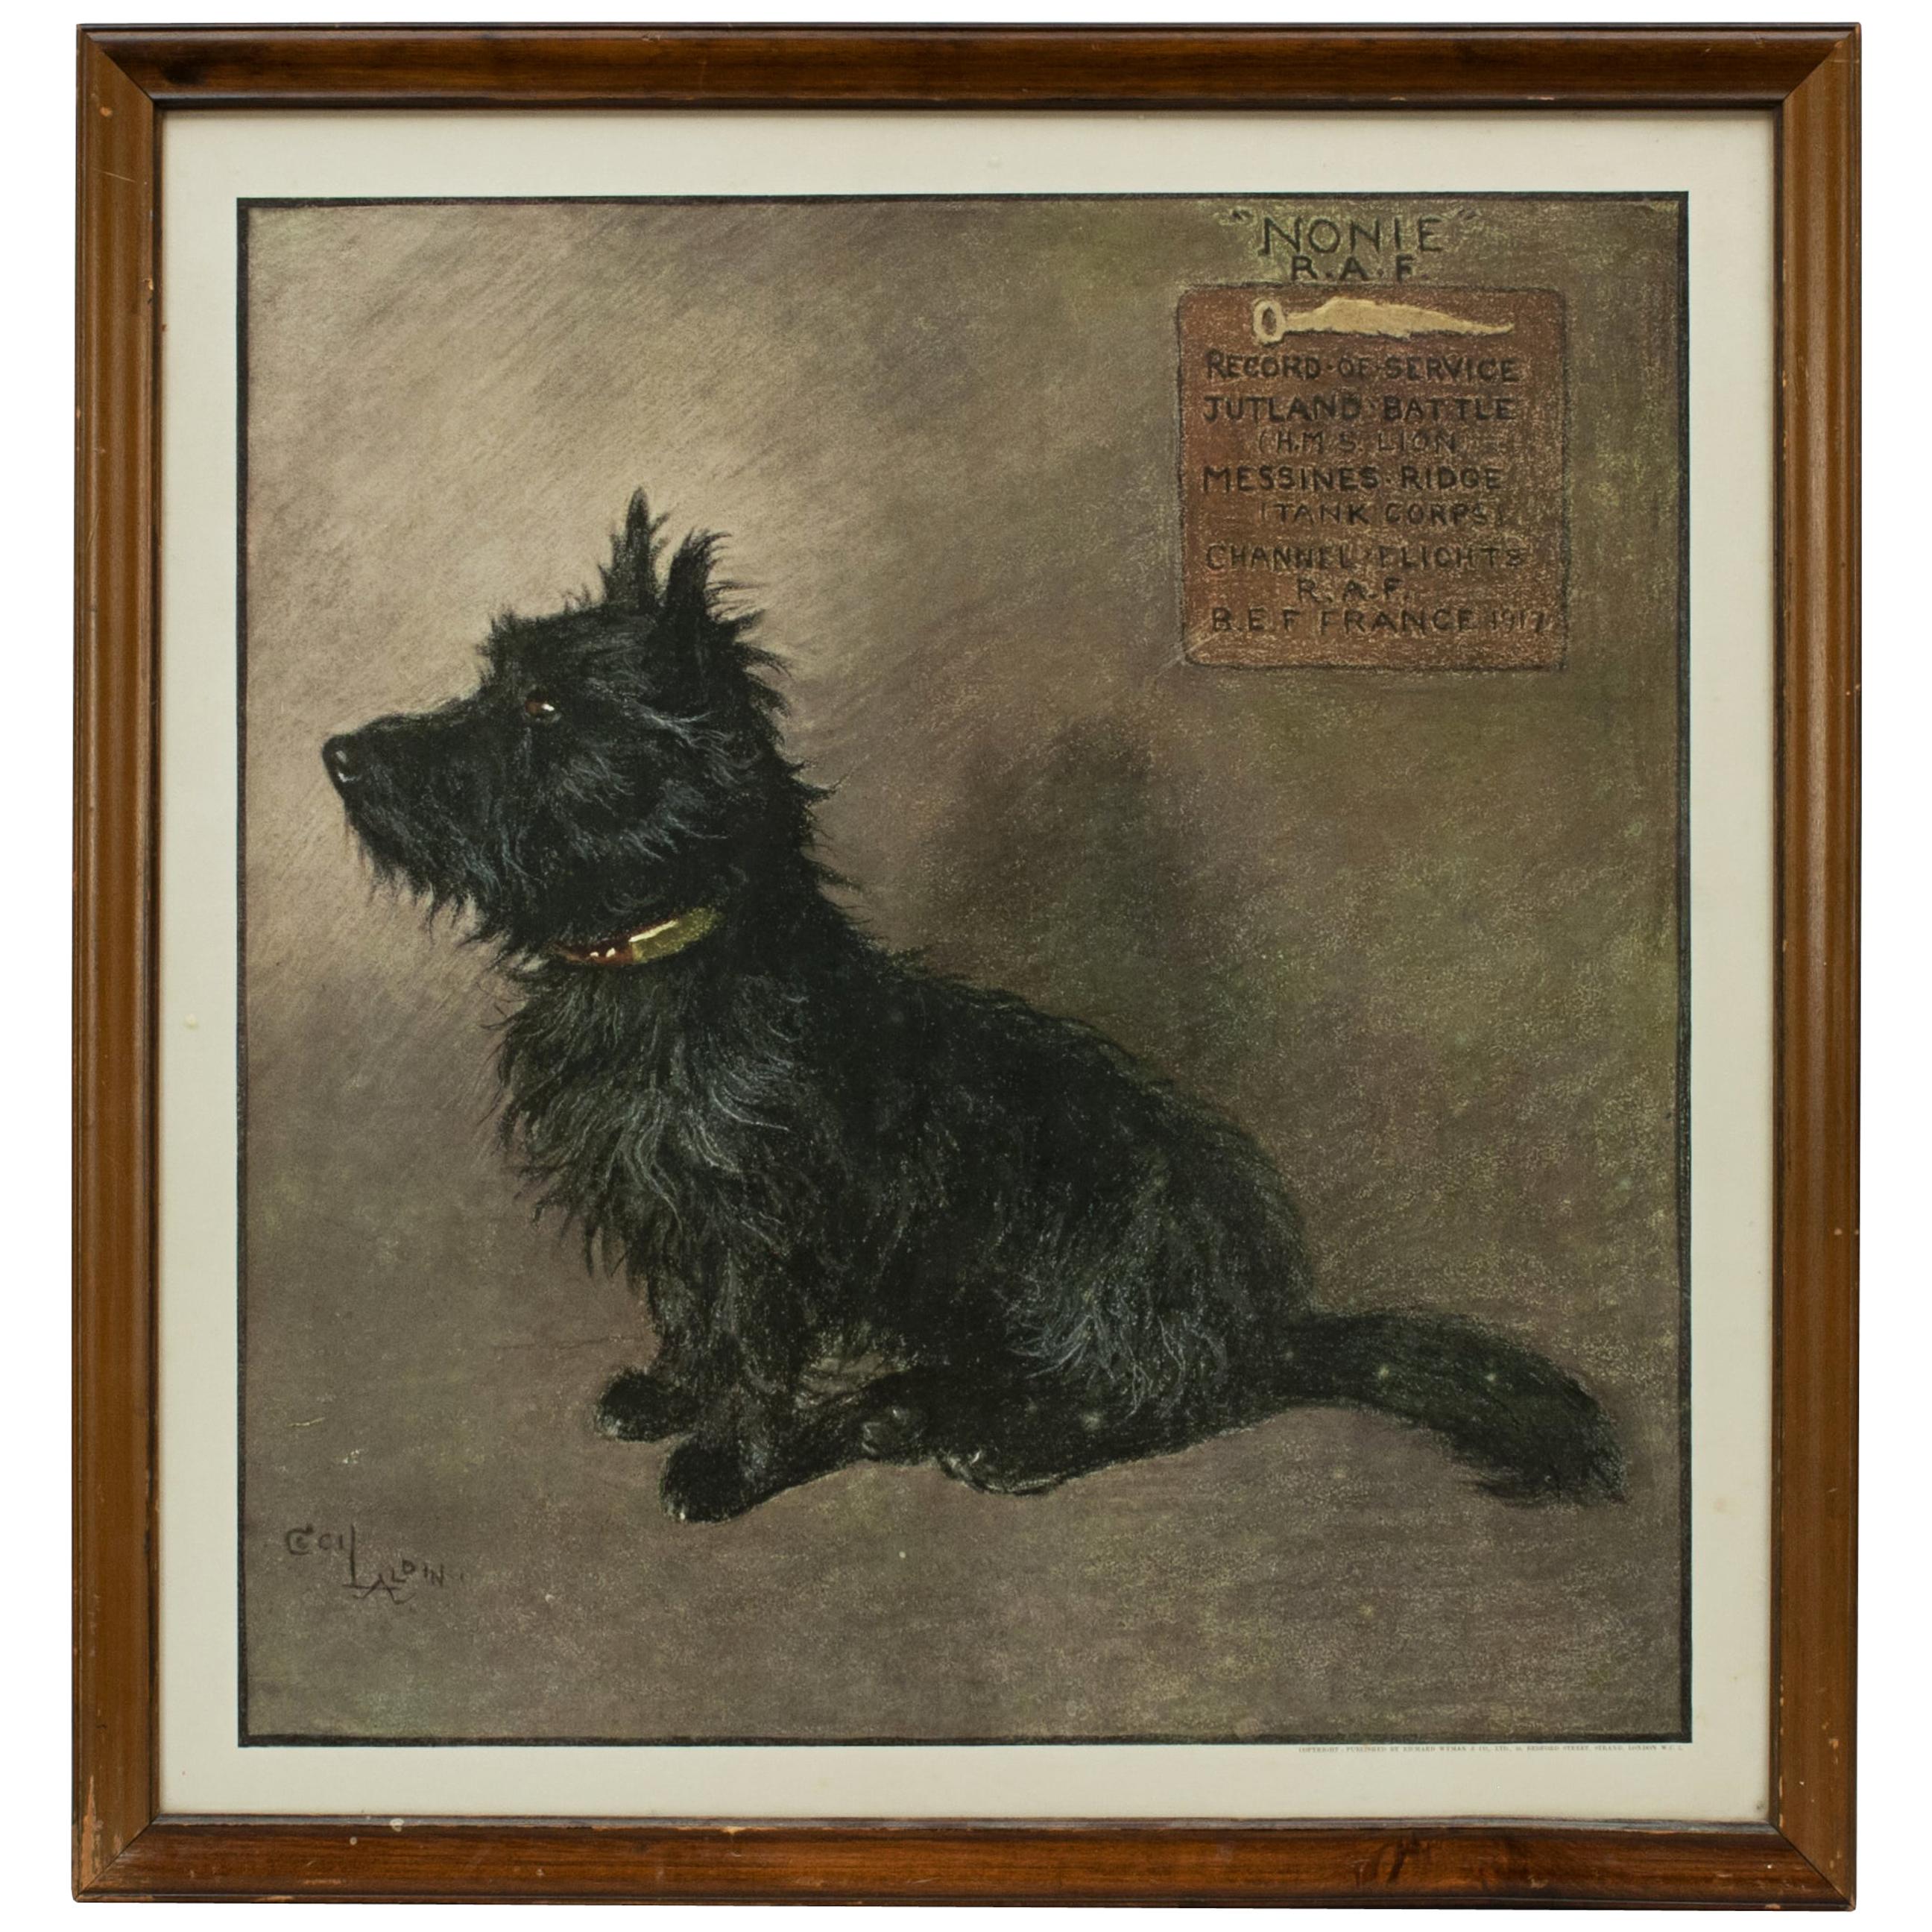 Vintage Scottie Dog Print by Cecil Aldin Canine Print, Nonie, R.A.F.